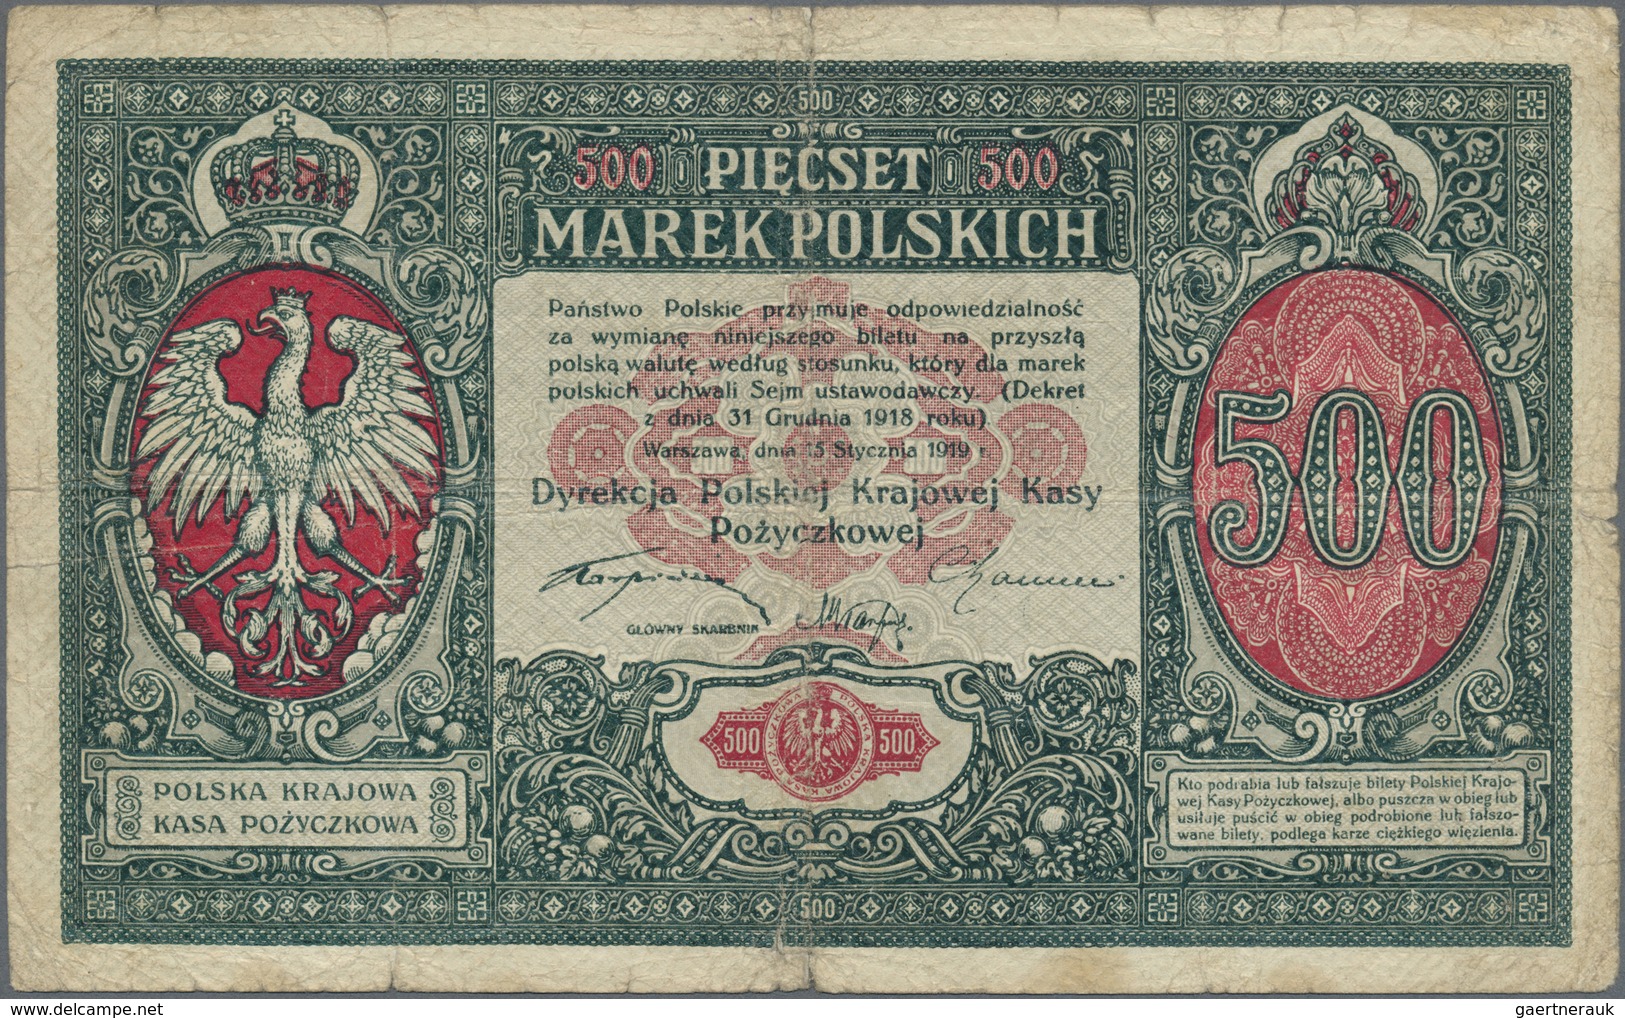 Poland / Polen: 500 Marek Polskich 1919, P.18, Almost Well Worn Condition With Several Border Tears, - Poland